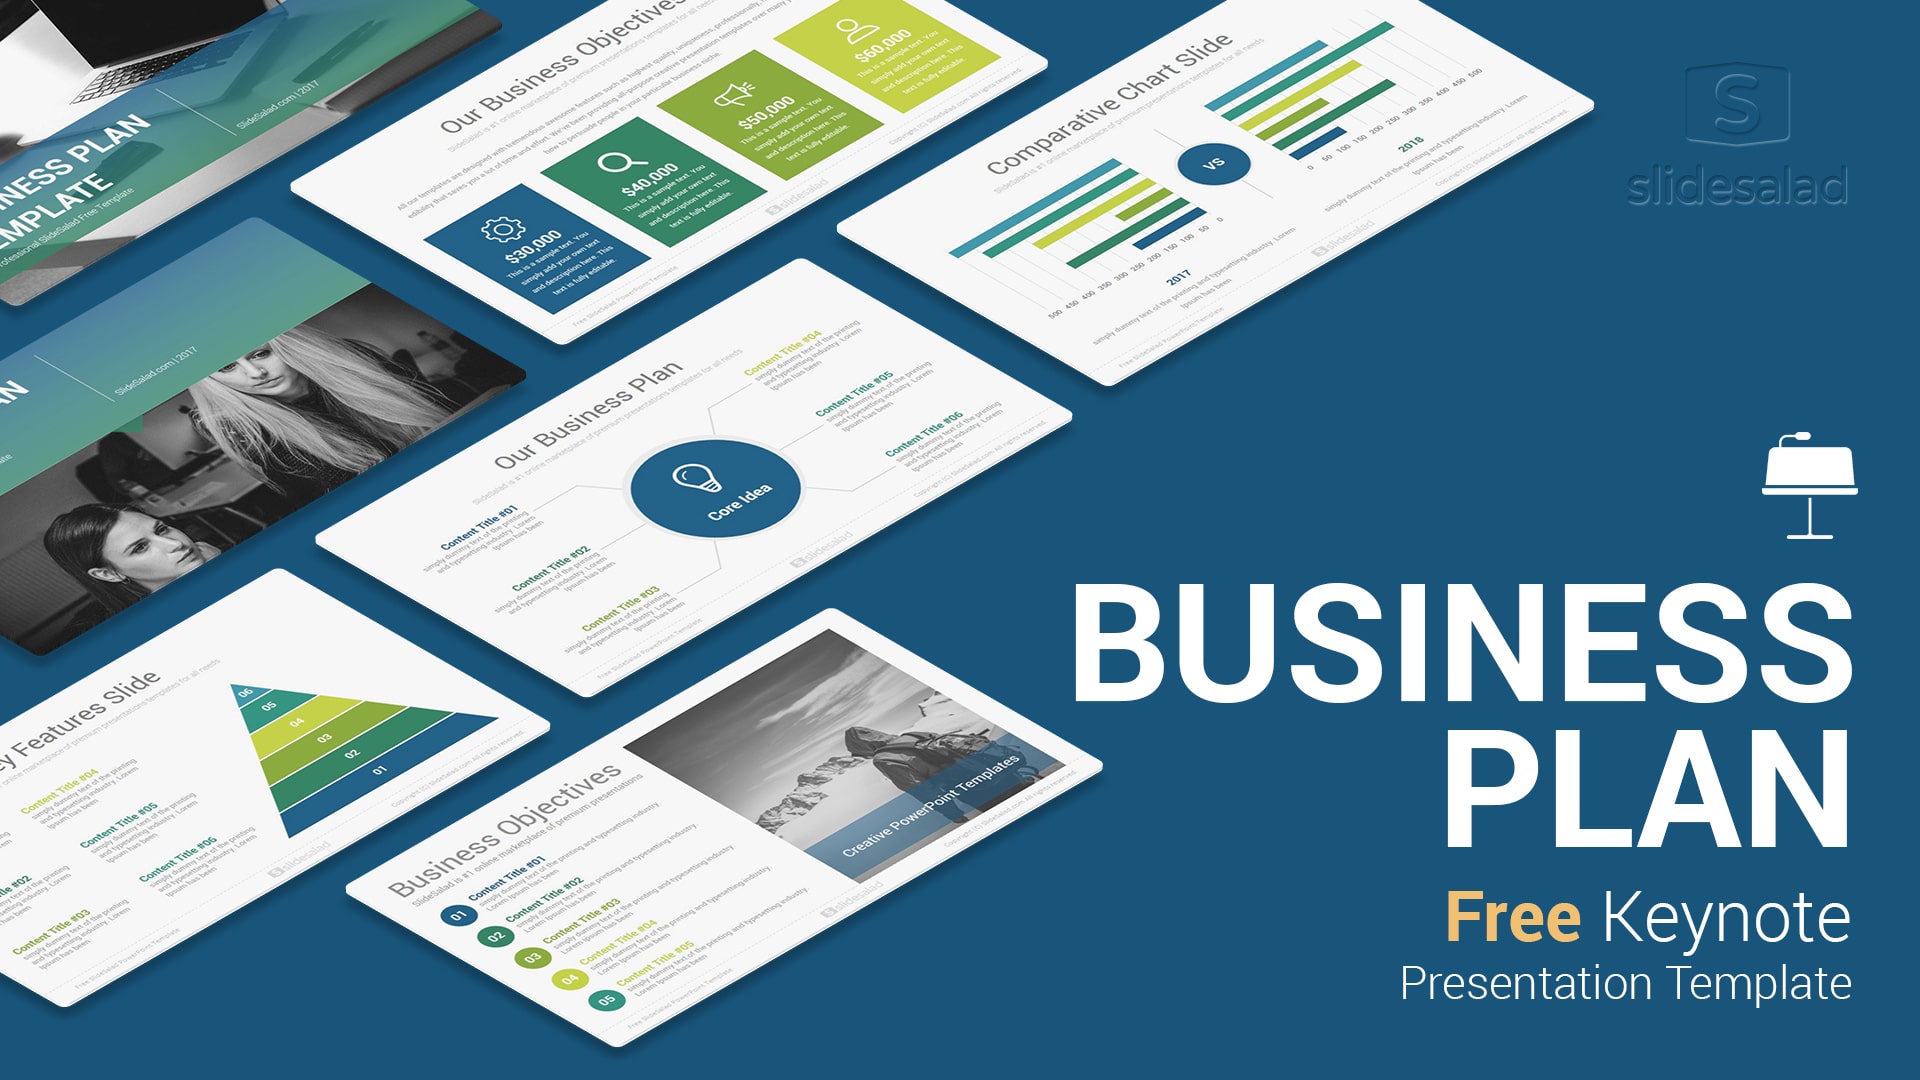 Business Plan Free Keynote Presentation Template SlideSalad